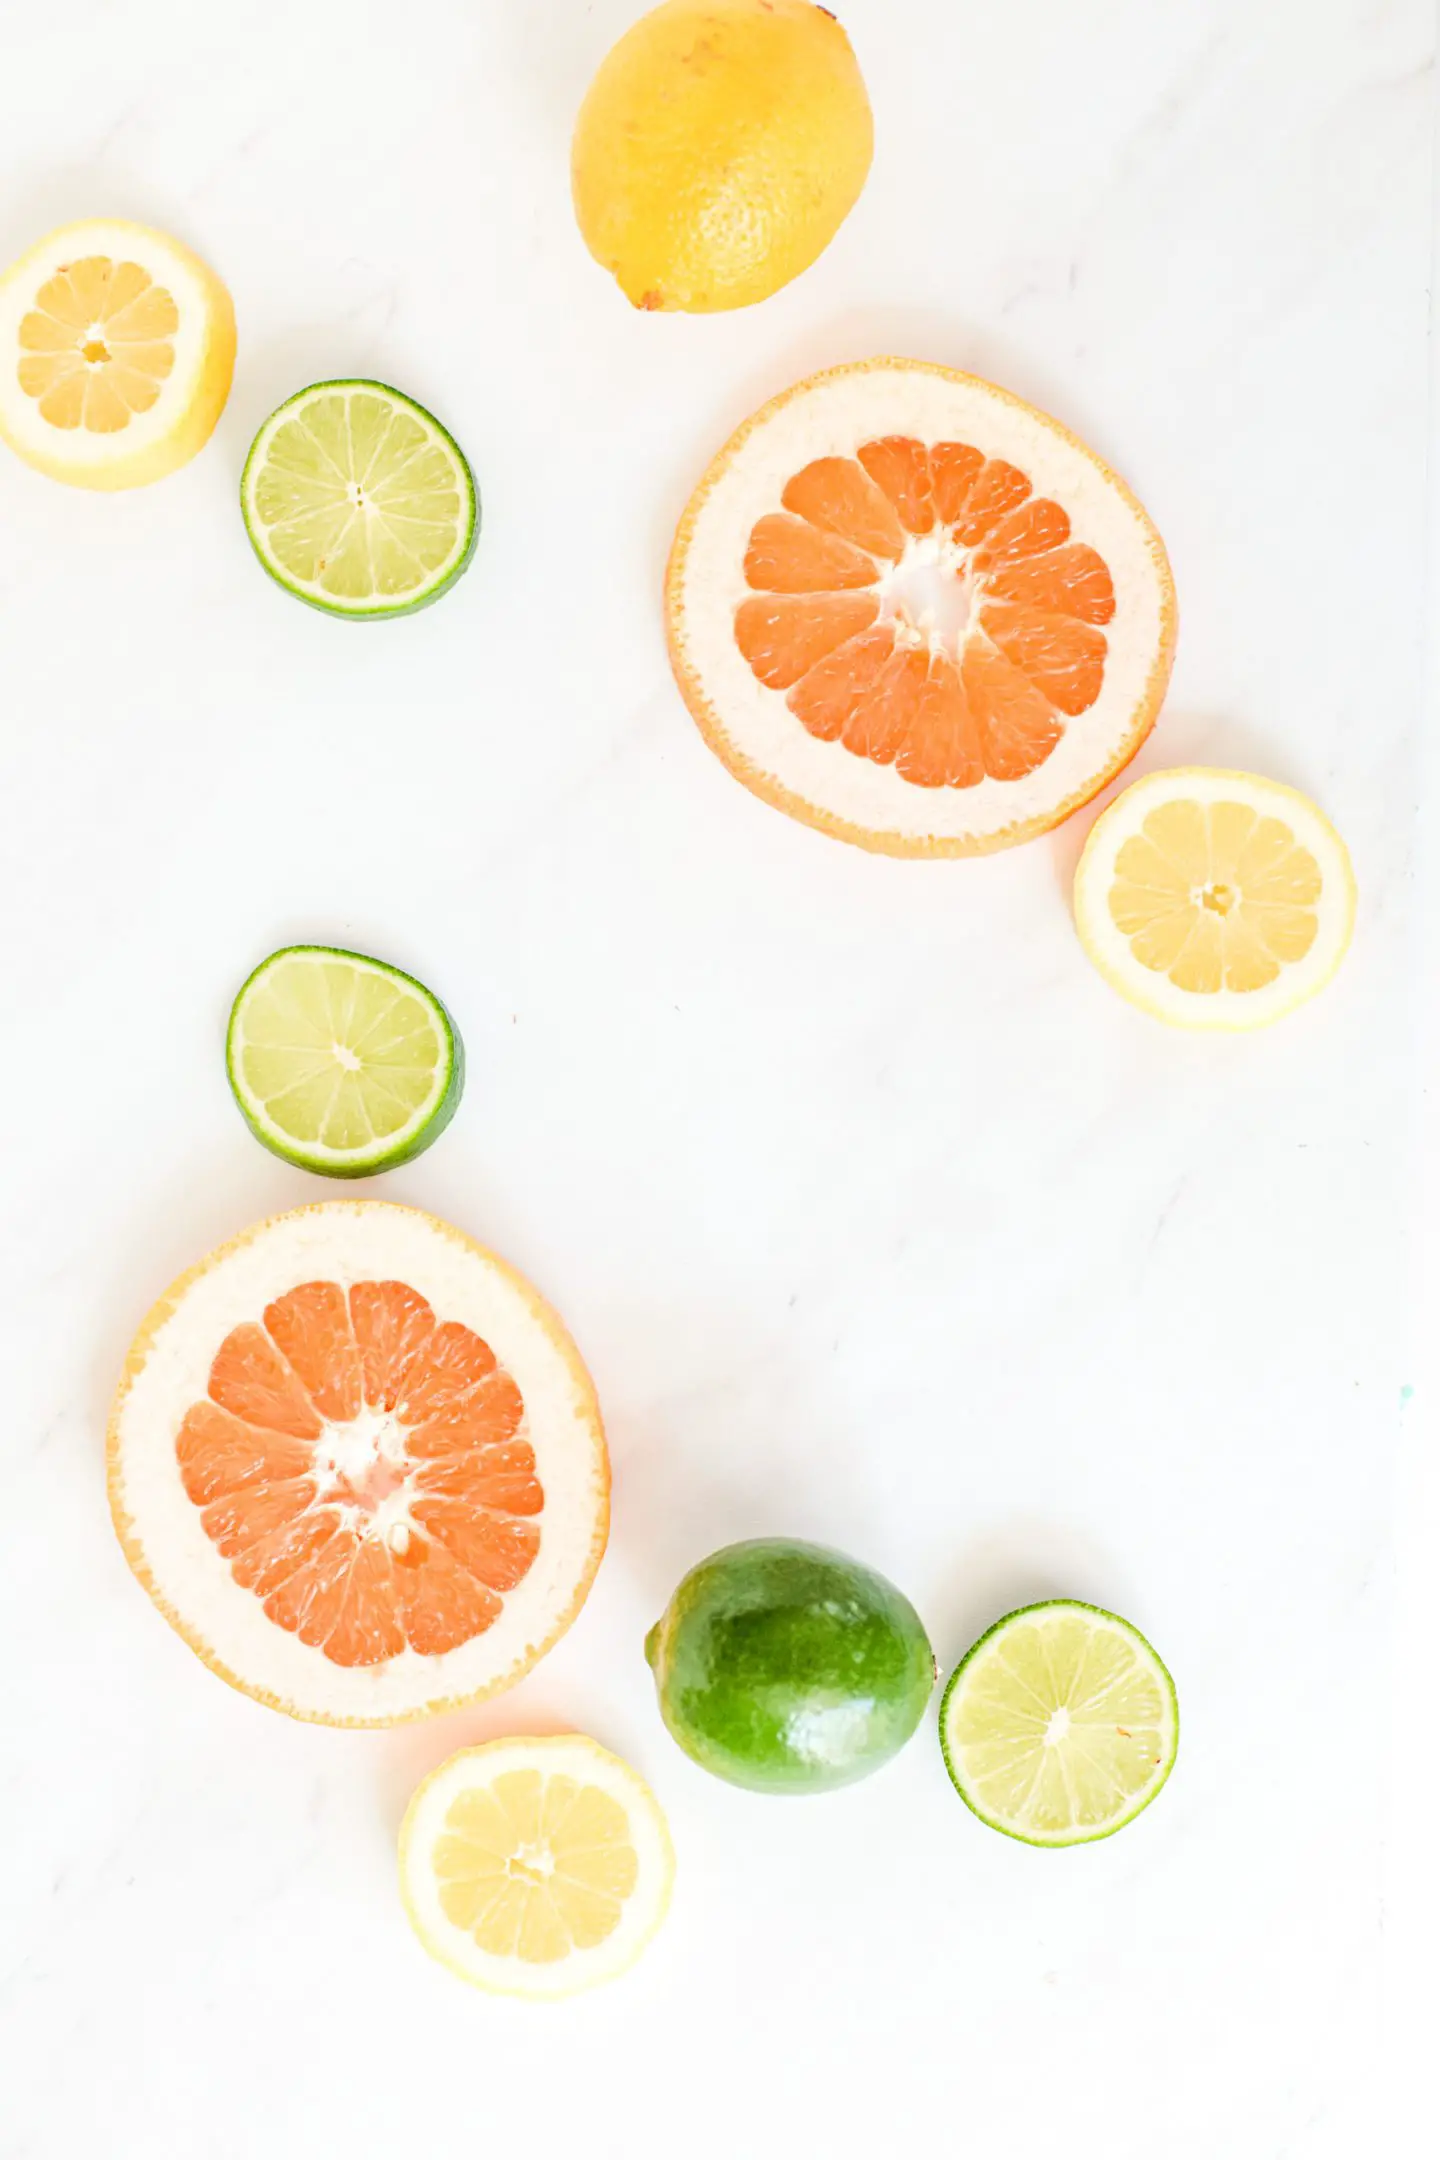 Citrus Fruits for Skin